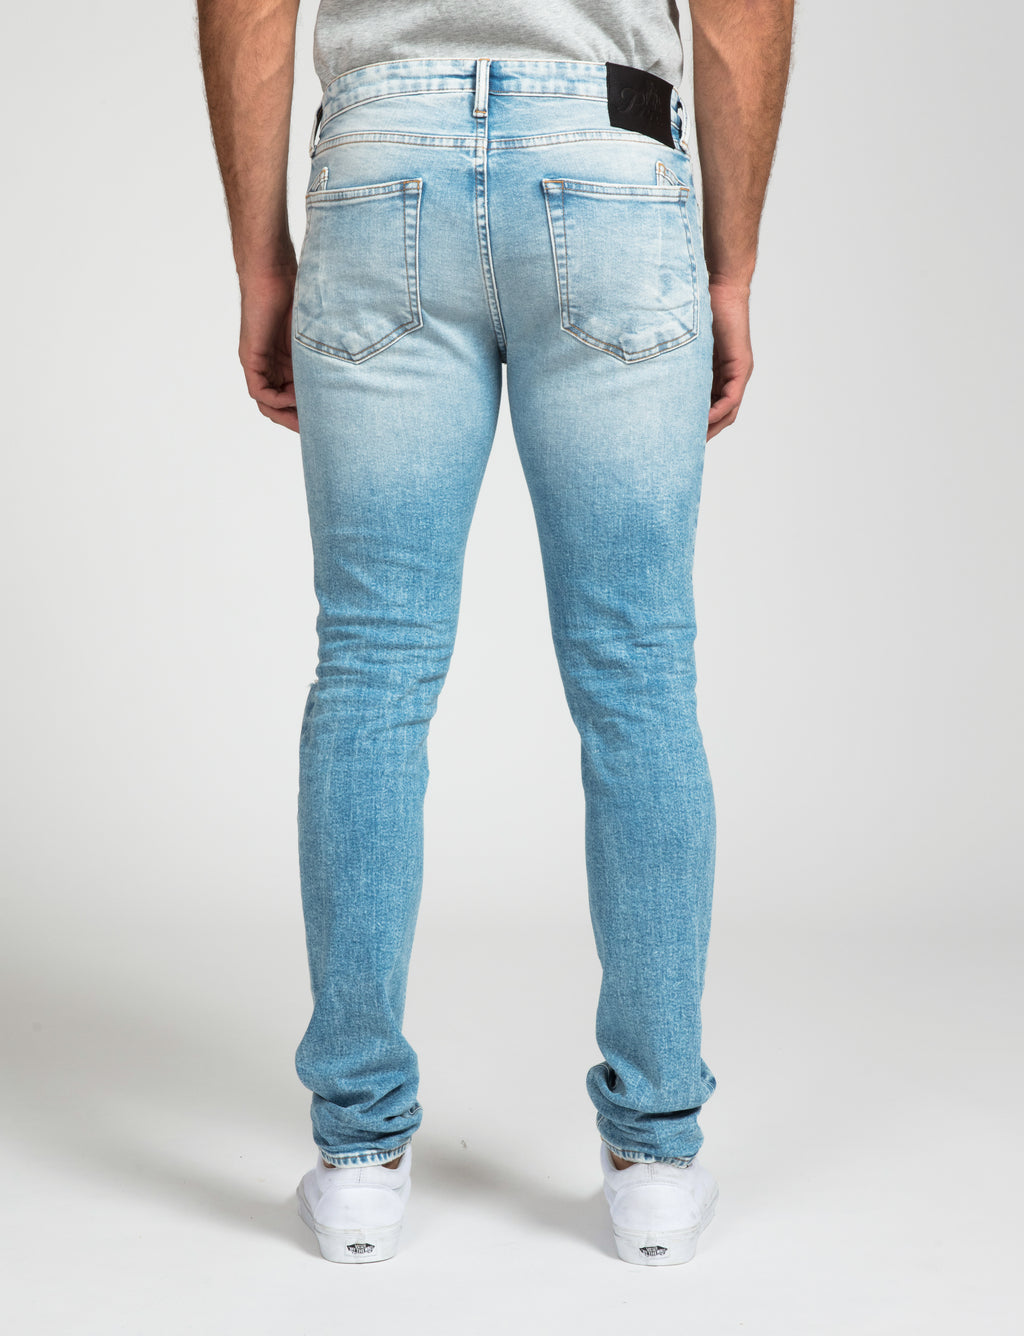 Men's Selvedge and Washed Denim Jeans | Prps Jeans